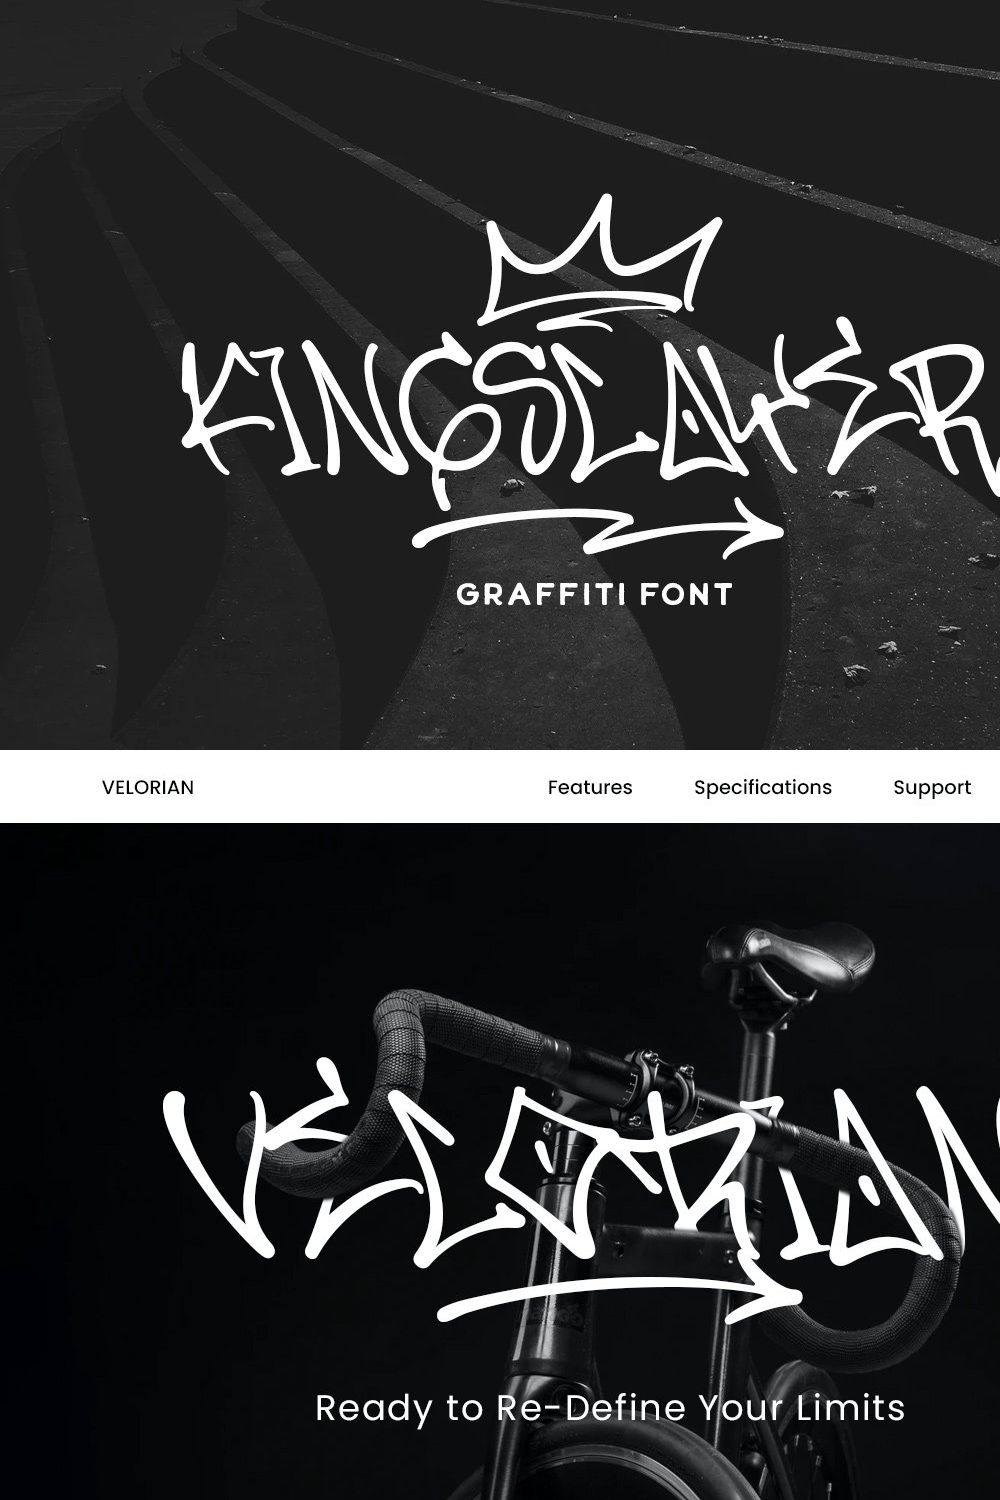 Kingslayer - Graffiti Font pinterest preview image.